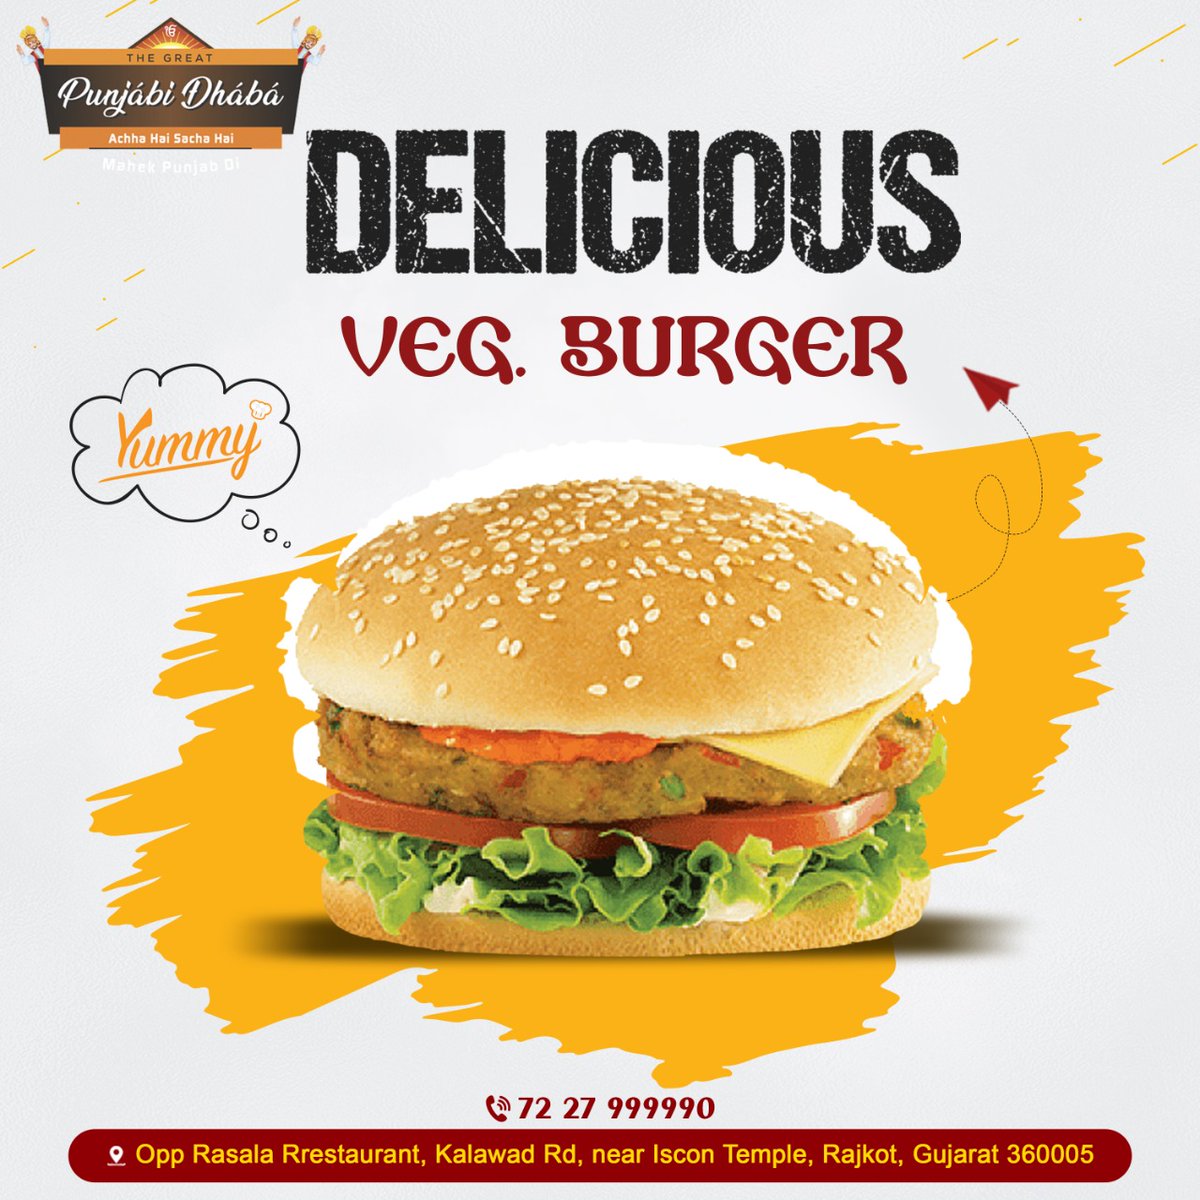 #thegreatpunjabidhaba #punjabidhaba #dhaba #vegburger #fastfood #burger #burgers #spicyfood #food #foodie #foodstagram #creamy #crunchy
#burgertime #bestburgerintown #bestburger #burgerlover #yummy #foodlover #fastfood #delicious #Gujarat